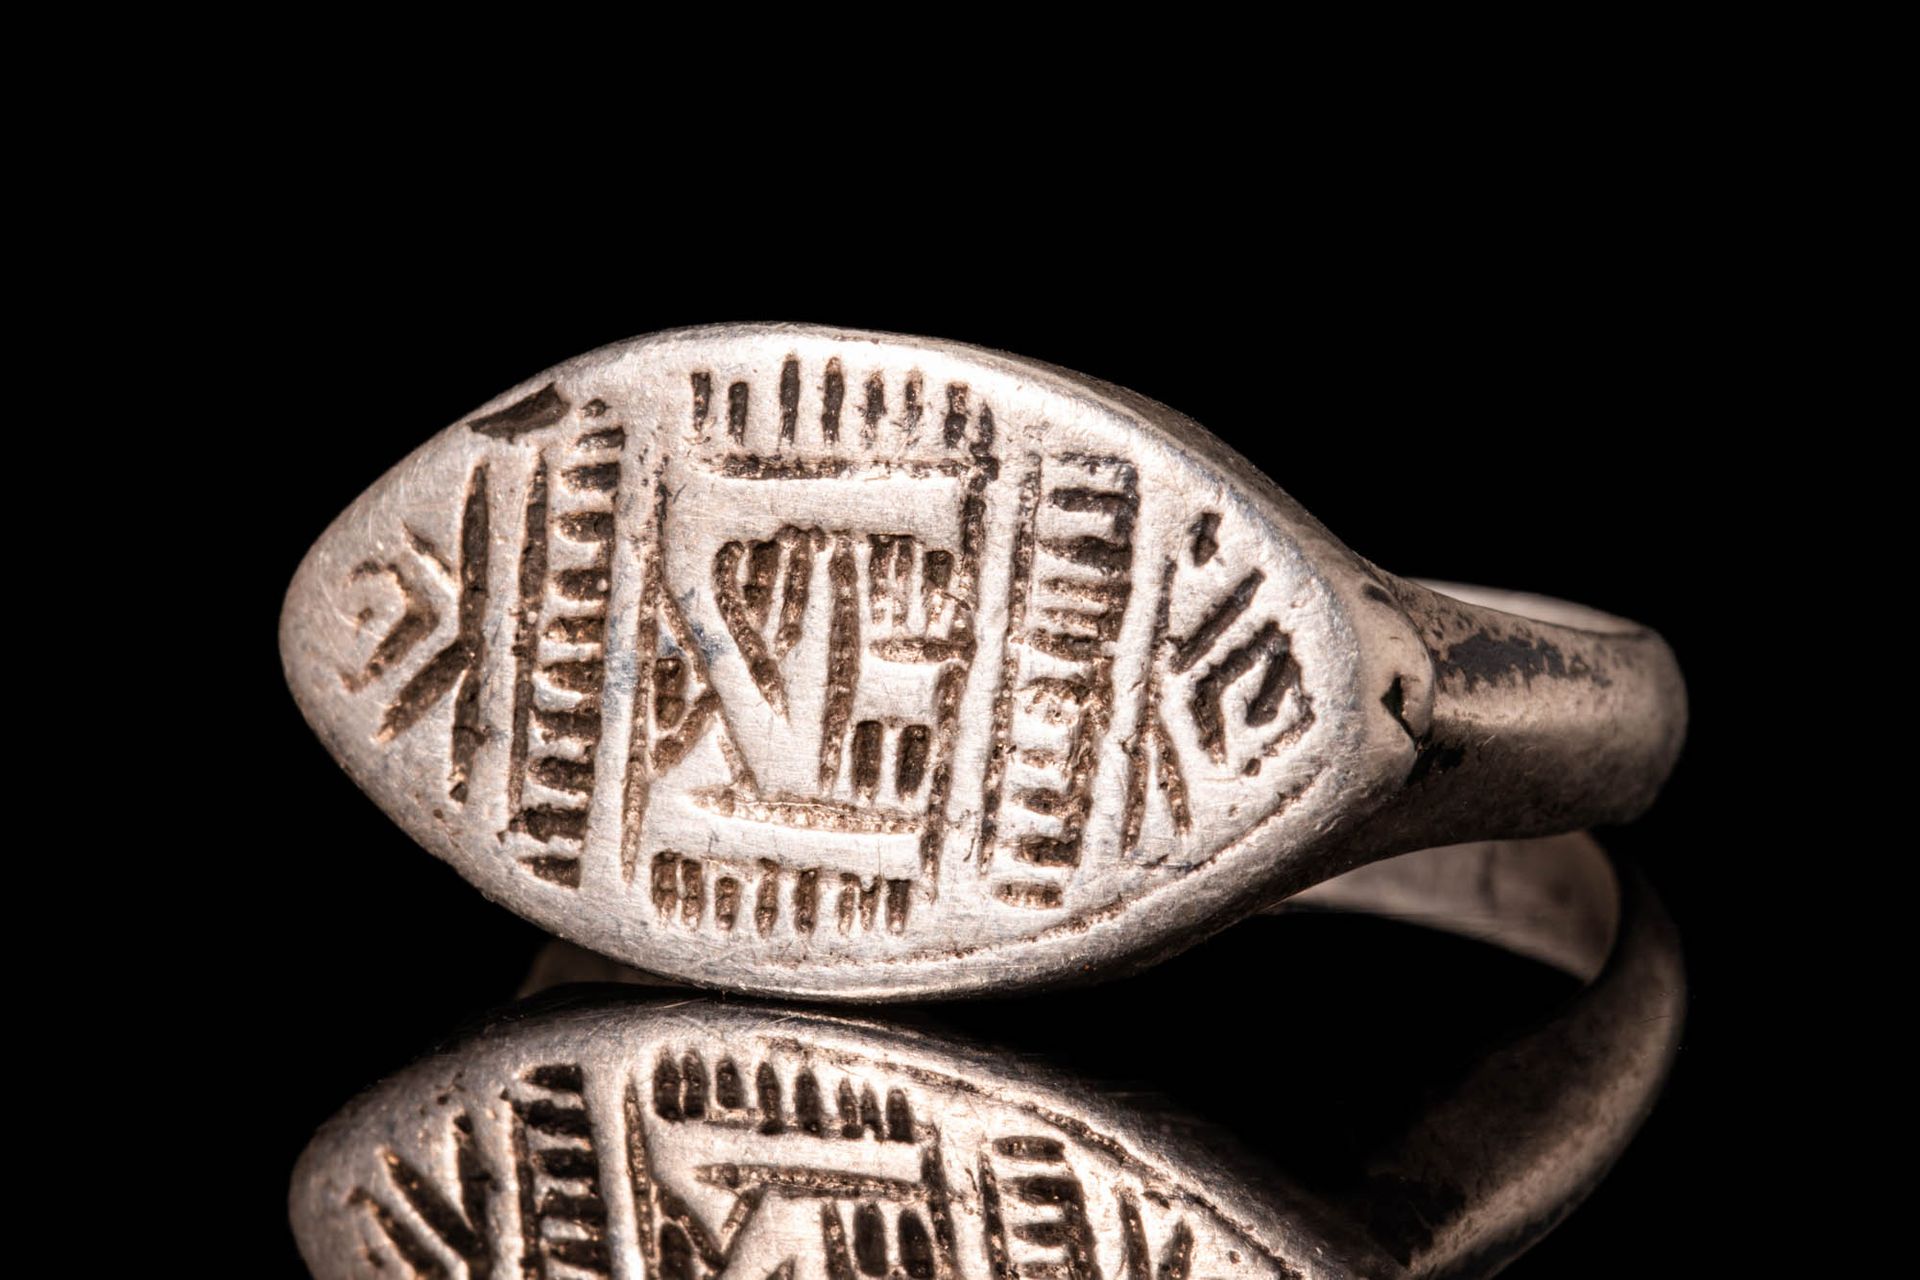 MEDIEVAL SELJUK SILVER RING WITH DECORATED BEZEL Ca.公元 1000 - 1200 年。
一枚中世纪塞尔柱银戒&hellip;